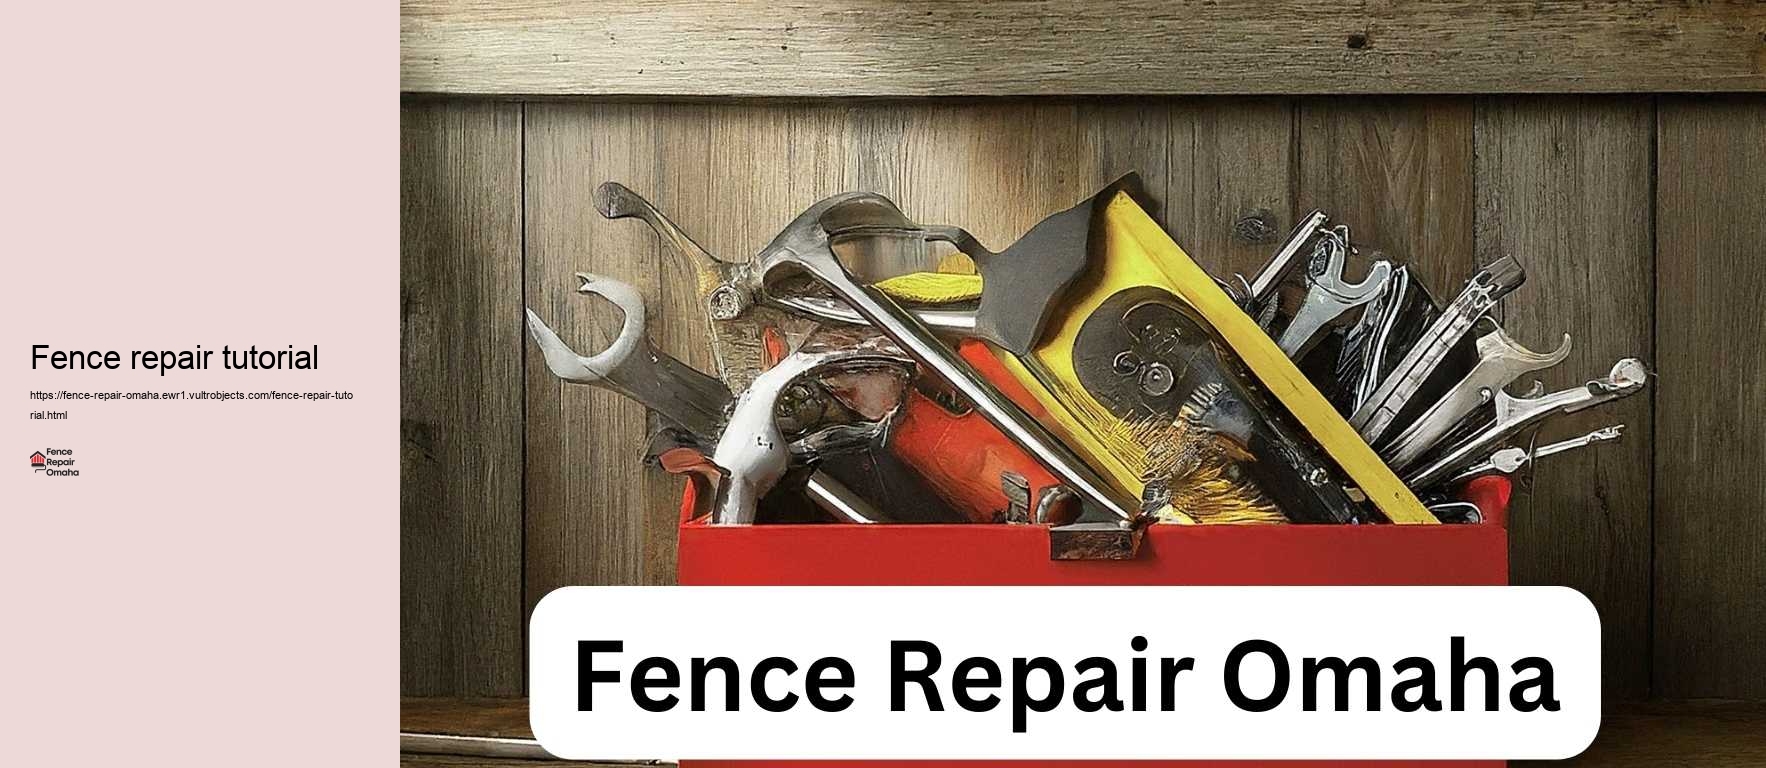 Fence repair tutorial